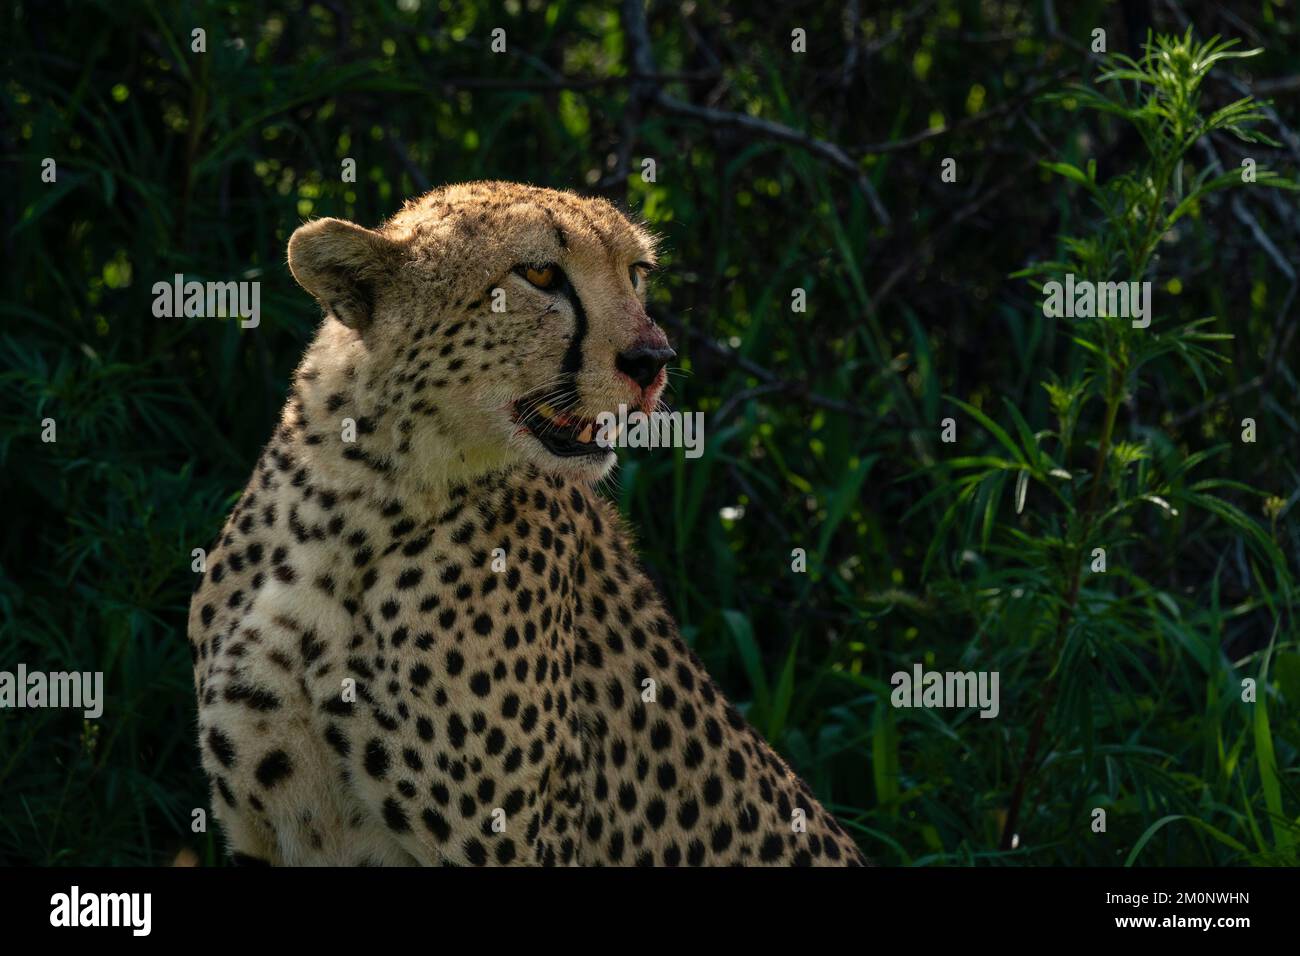 Cheetah (Acinonyx jubatus), zone de conservation de Ndutu, Serengeti, Tanzanie. Banque D'Images